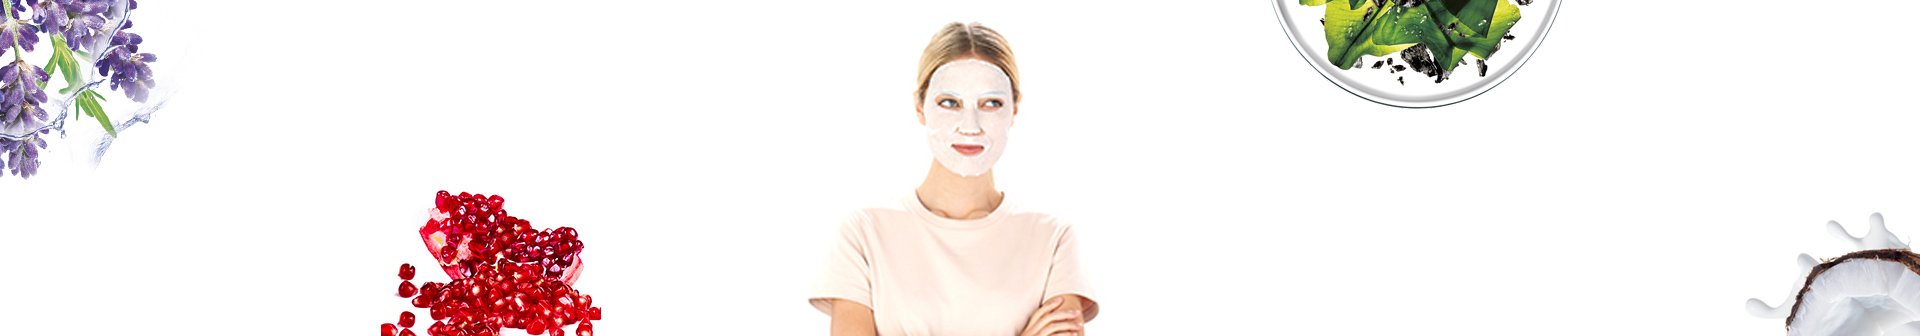 Garnier hero skincare mask article image 